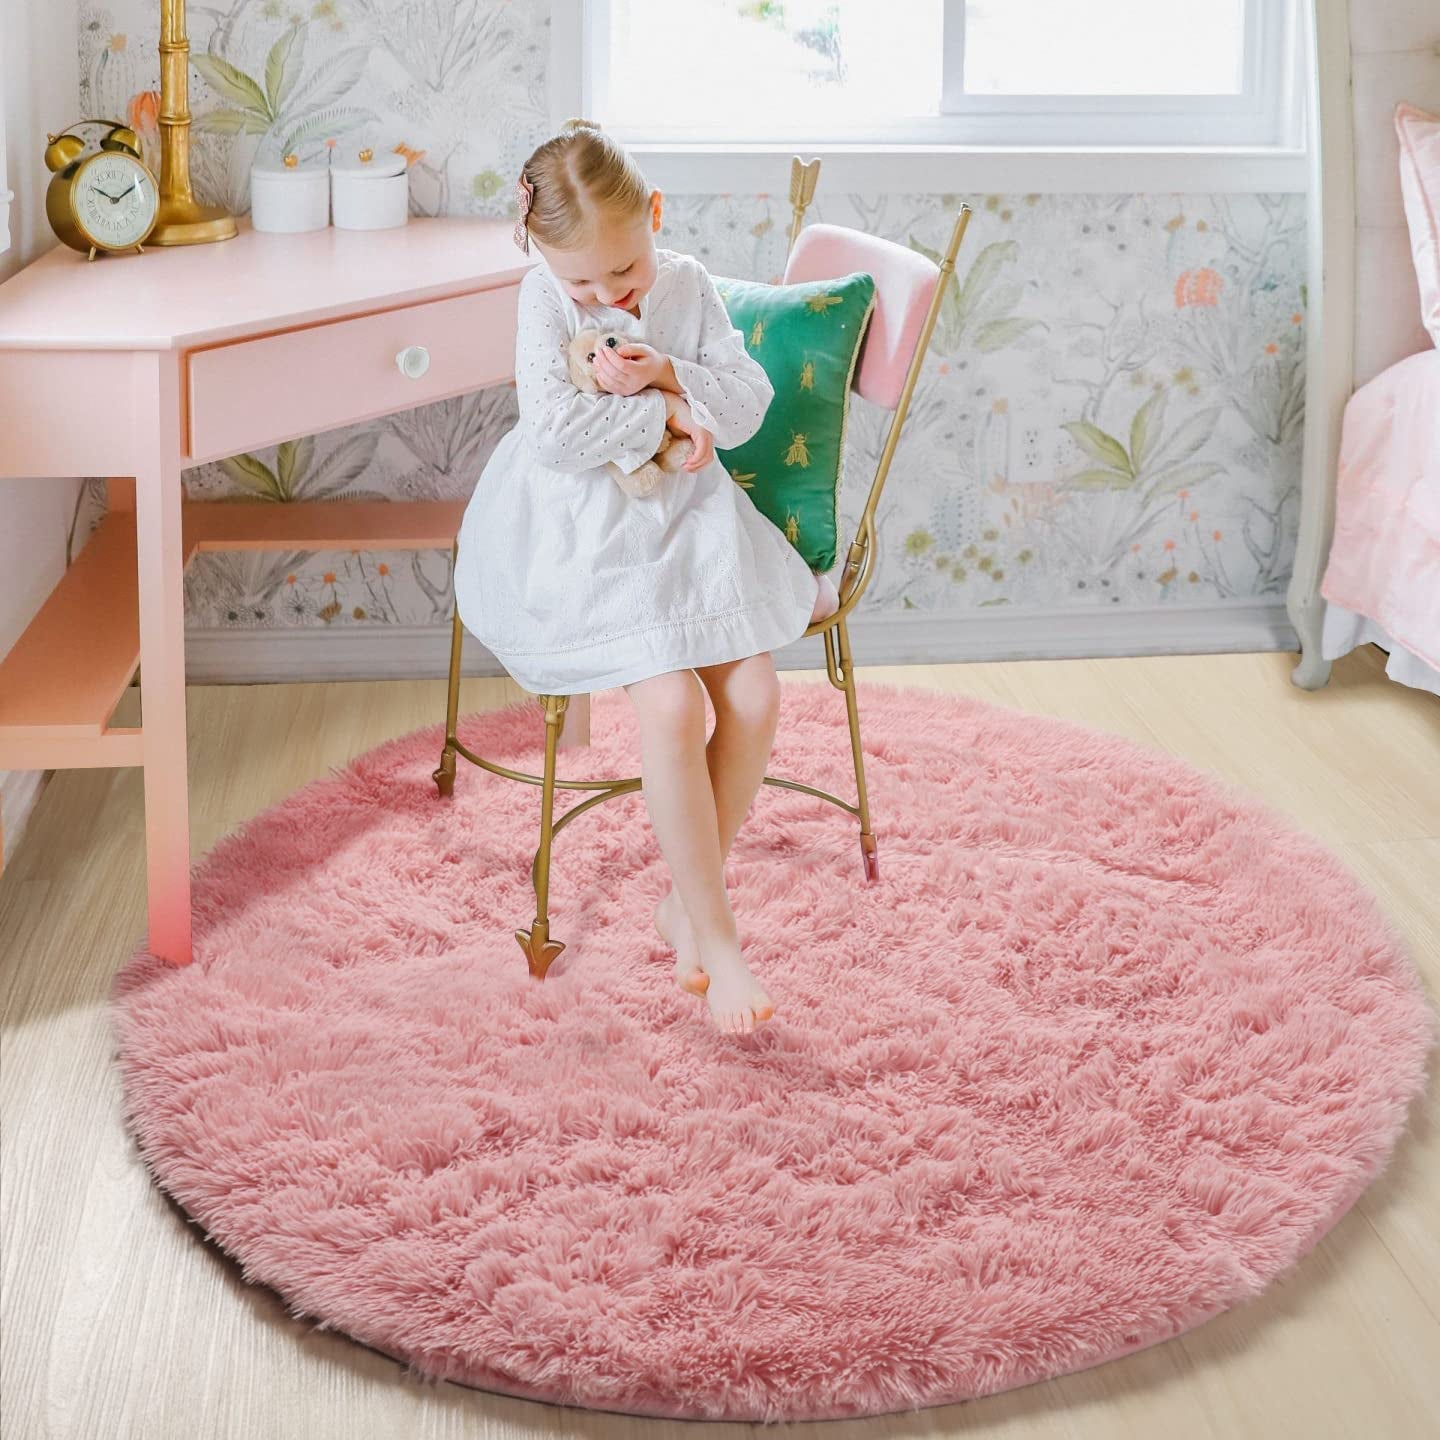 Pink round Area Rug 4X4, Soft Bedroom Circle Rugs Mats for Kids Girls Teen Room, Kawaii Fluffy Plush Shaggy Carpet for Baby Nursery Living Room Playroom Home Decor Princess Castle